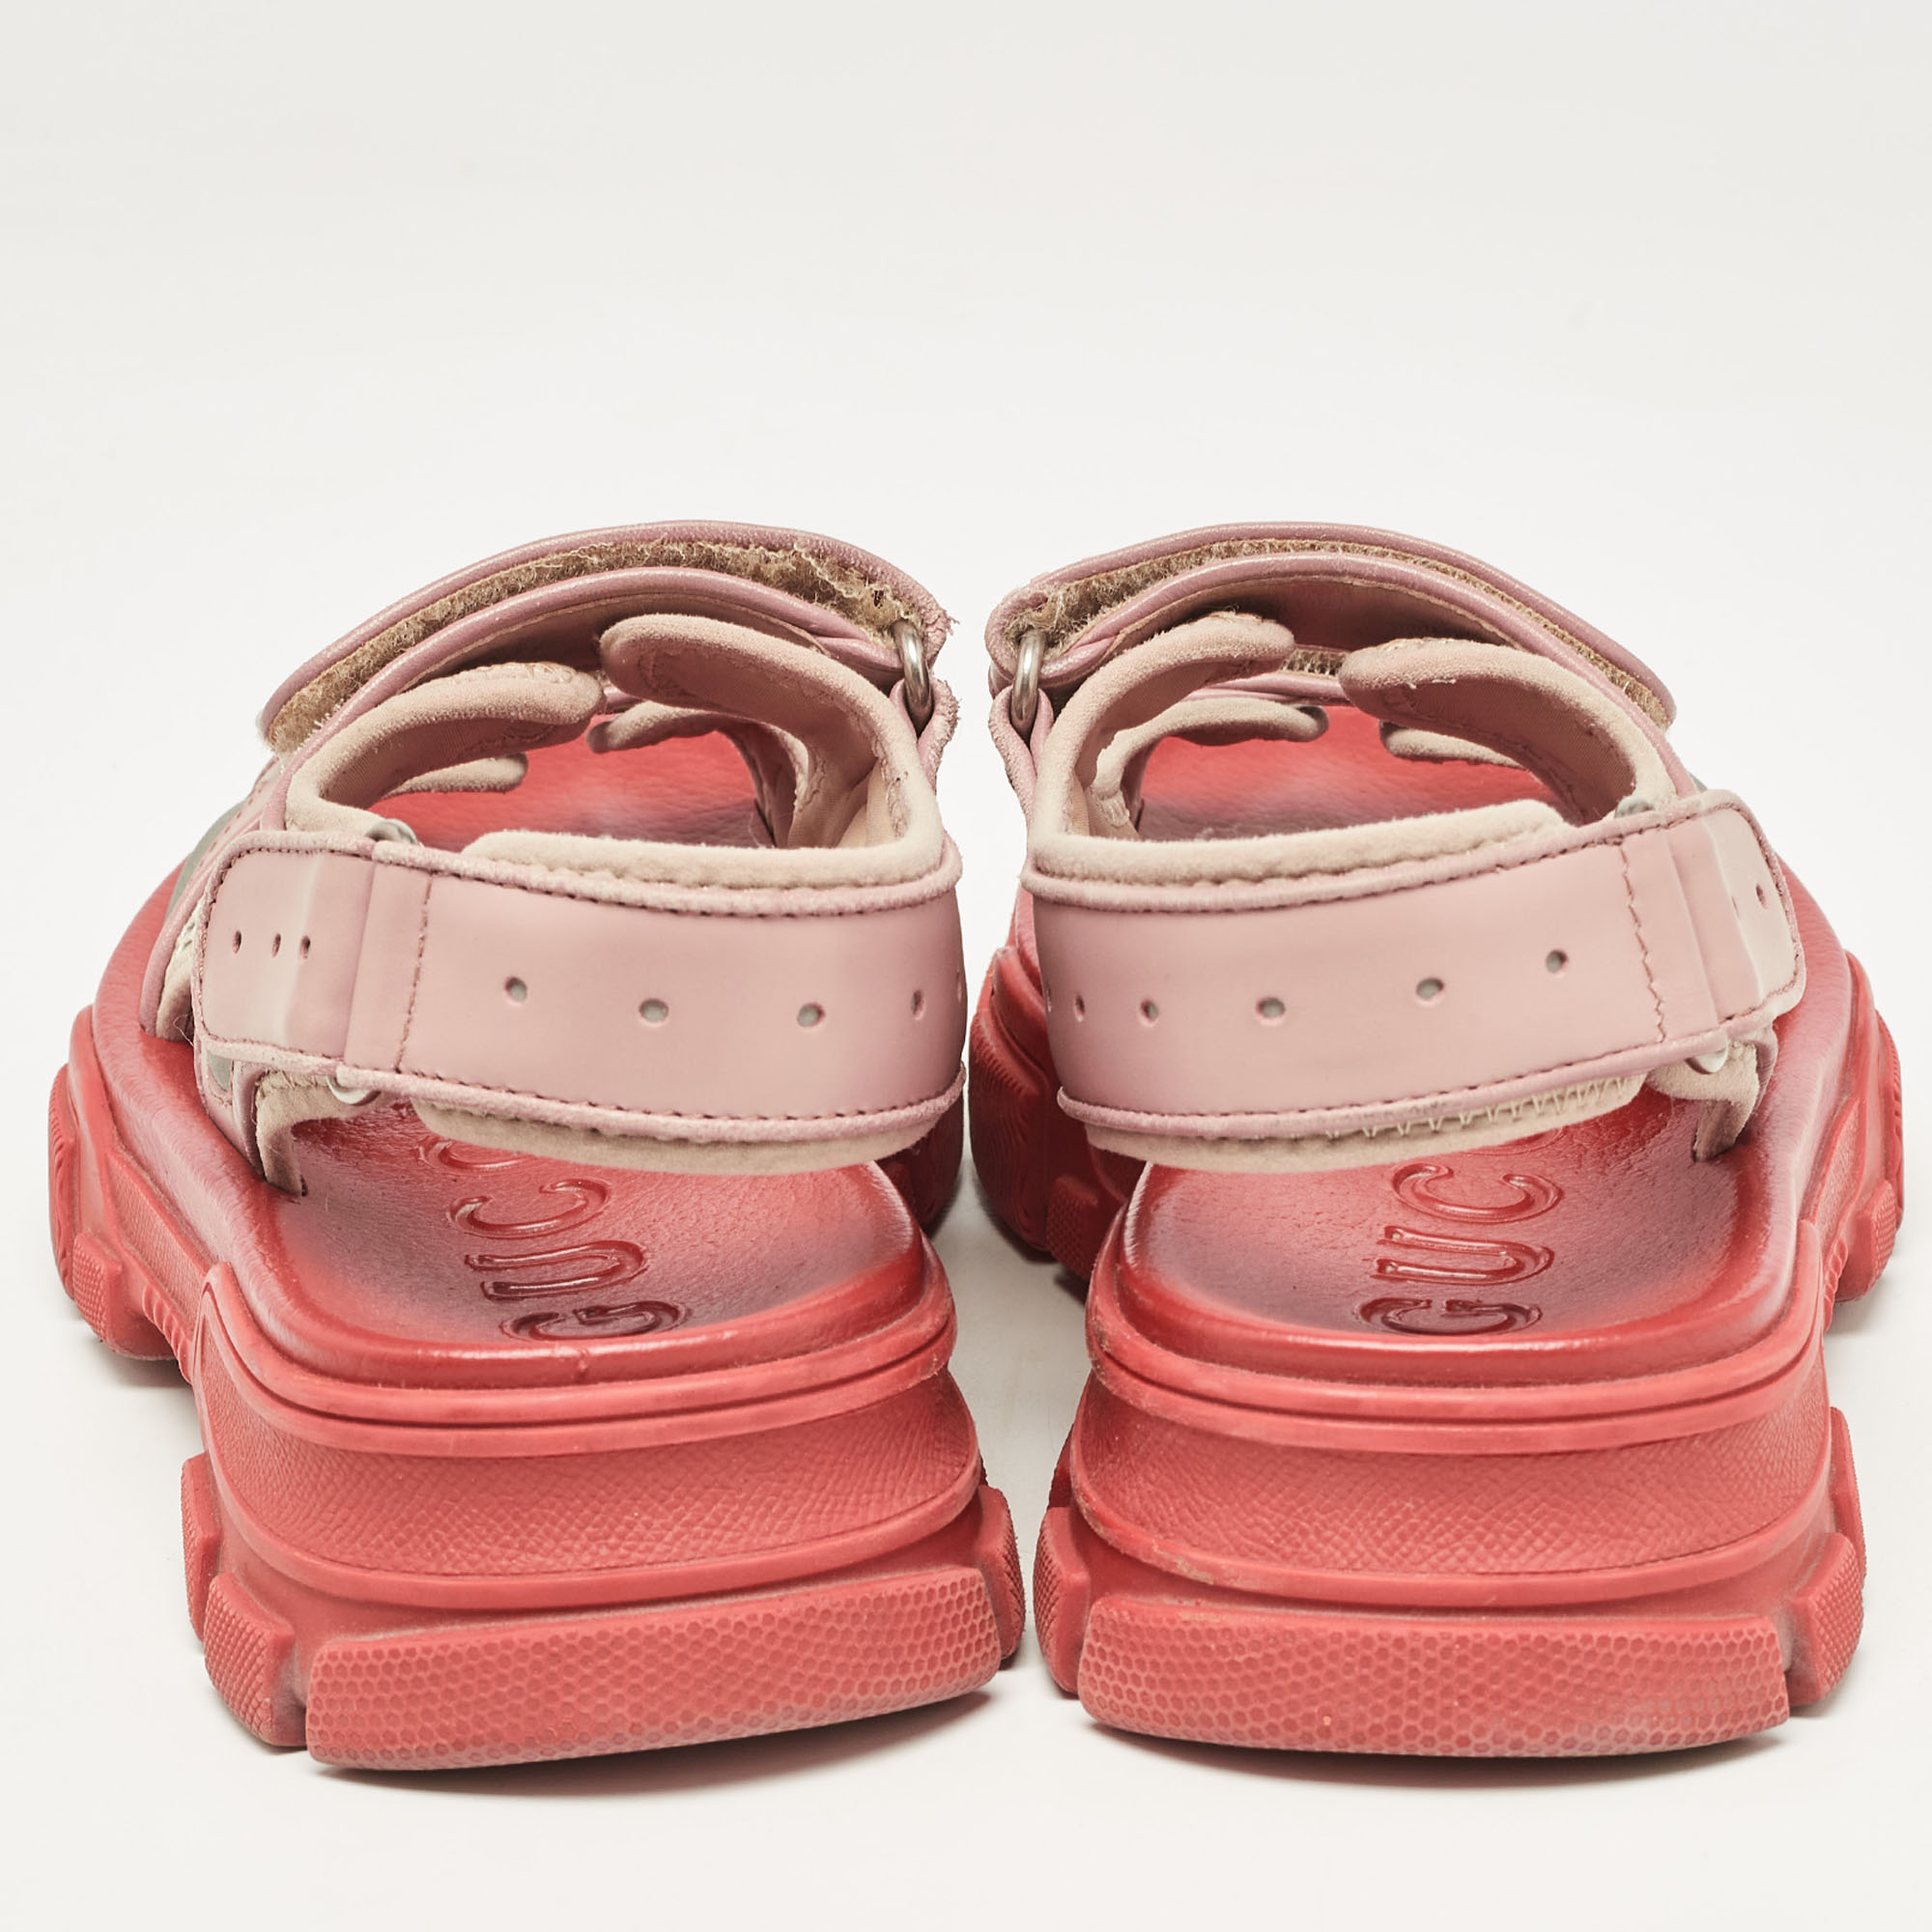 Gucci Beige/White Leather And Mesh Sega Velcro Slingback Sandals Size 36